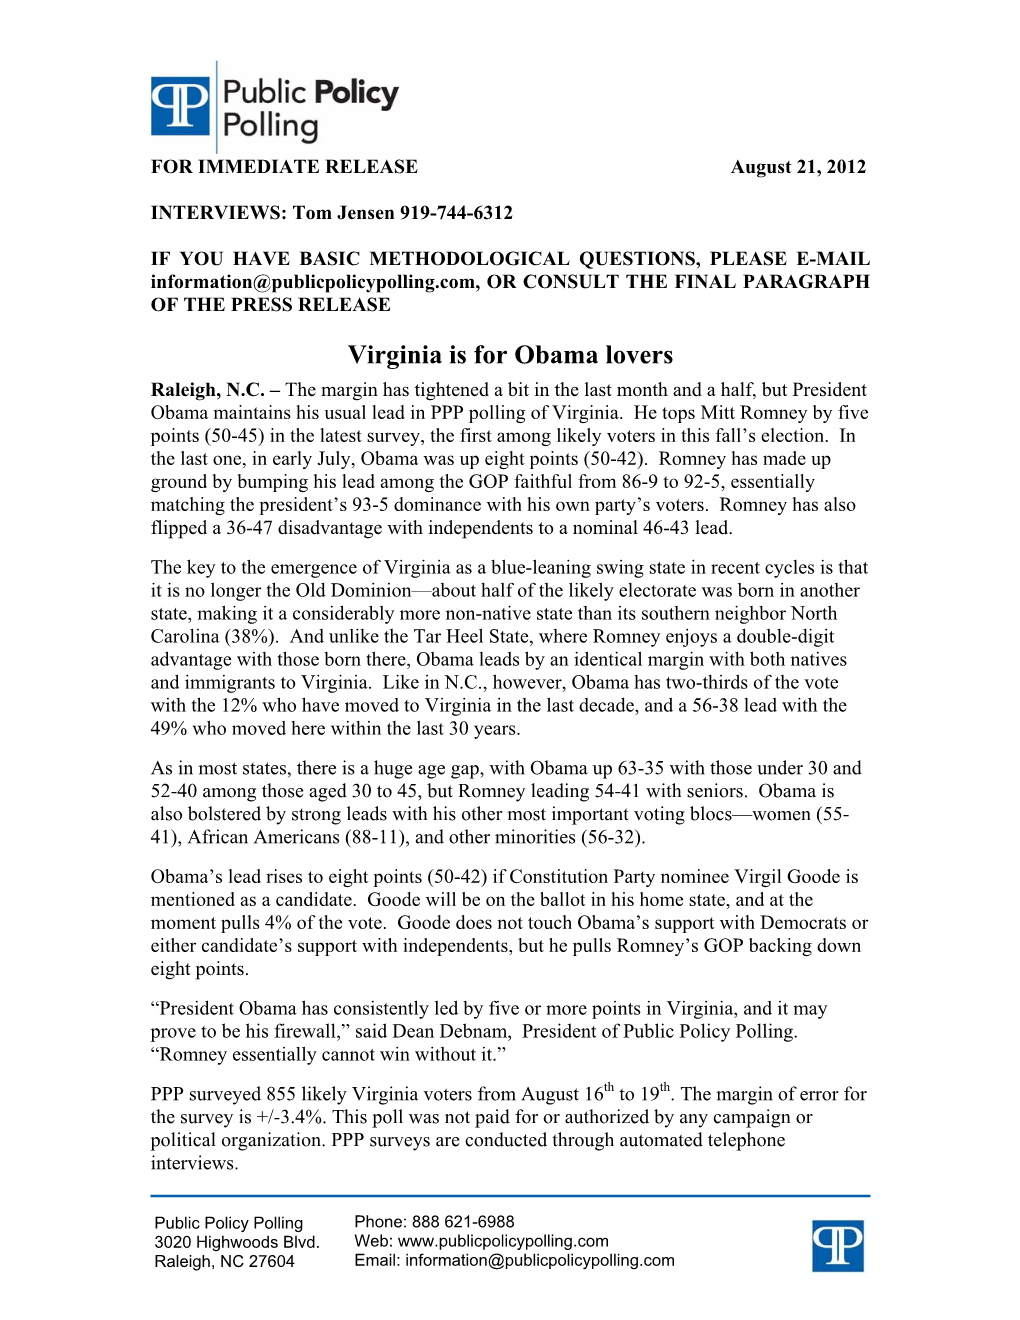 Virginia Is for Obama Lovers Raleigh, N.C